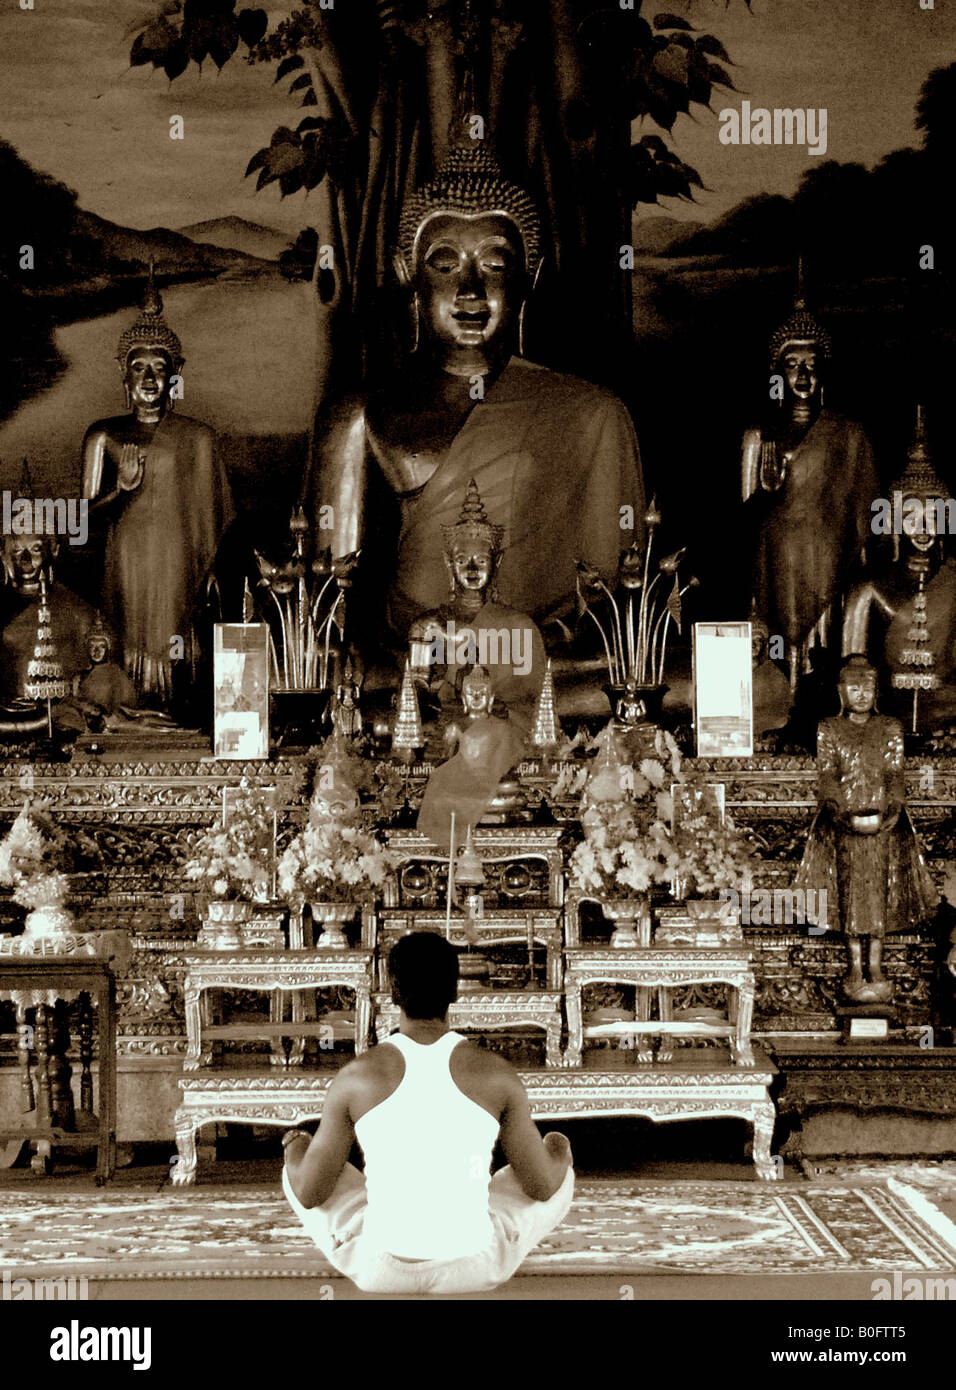 Mann, der betet an Alter, Tempel, bangkok Stockfoto